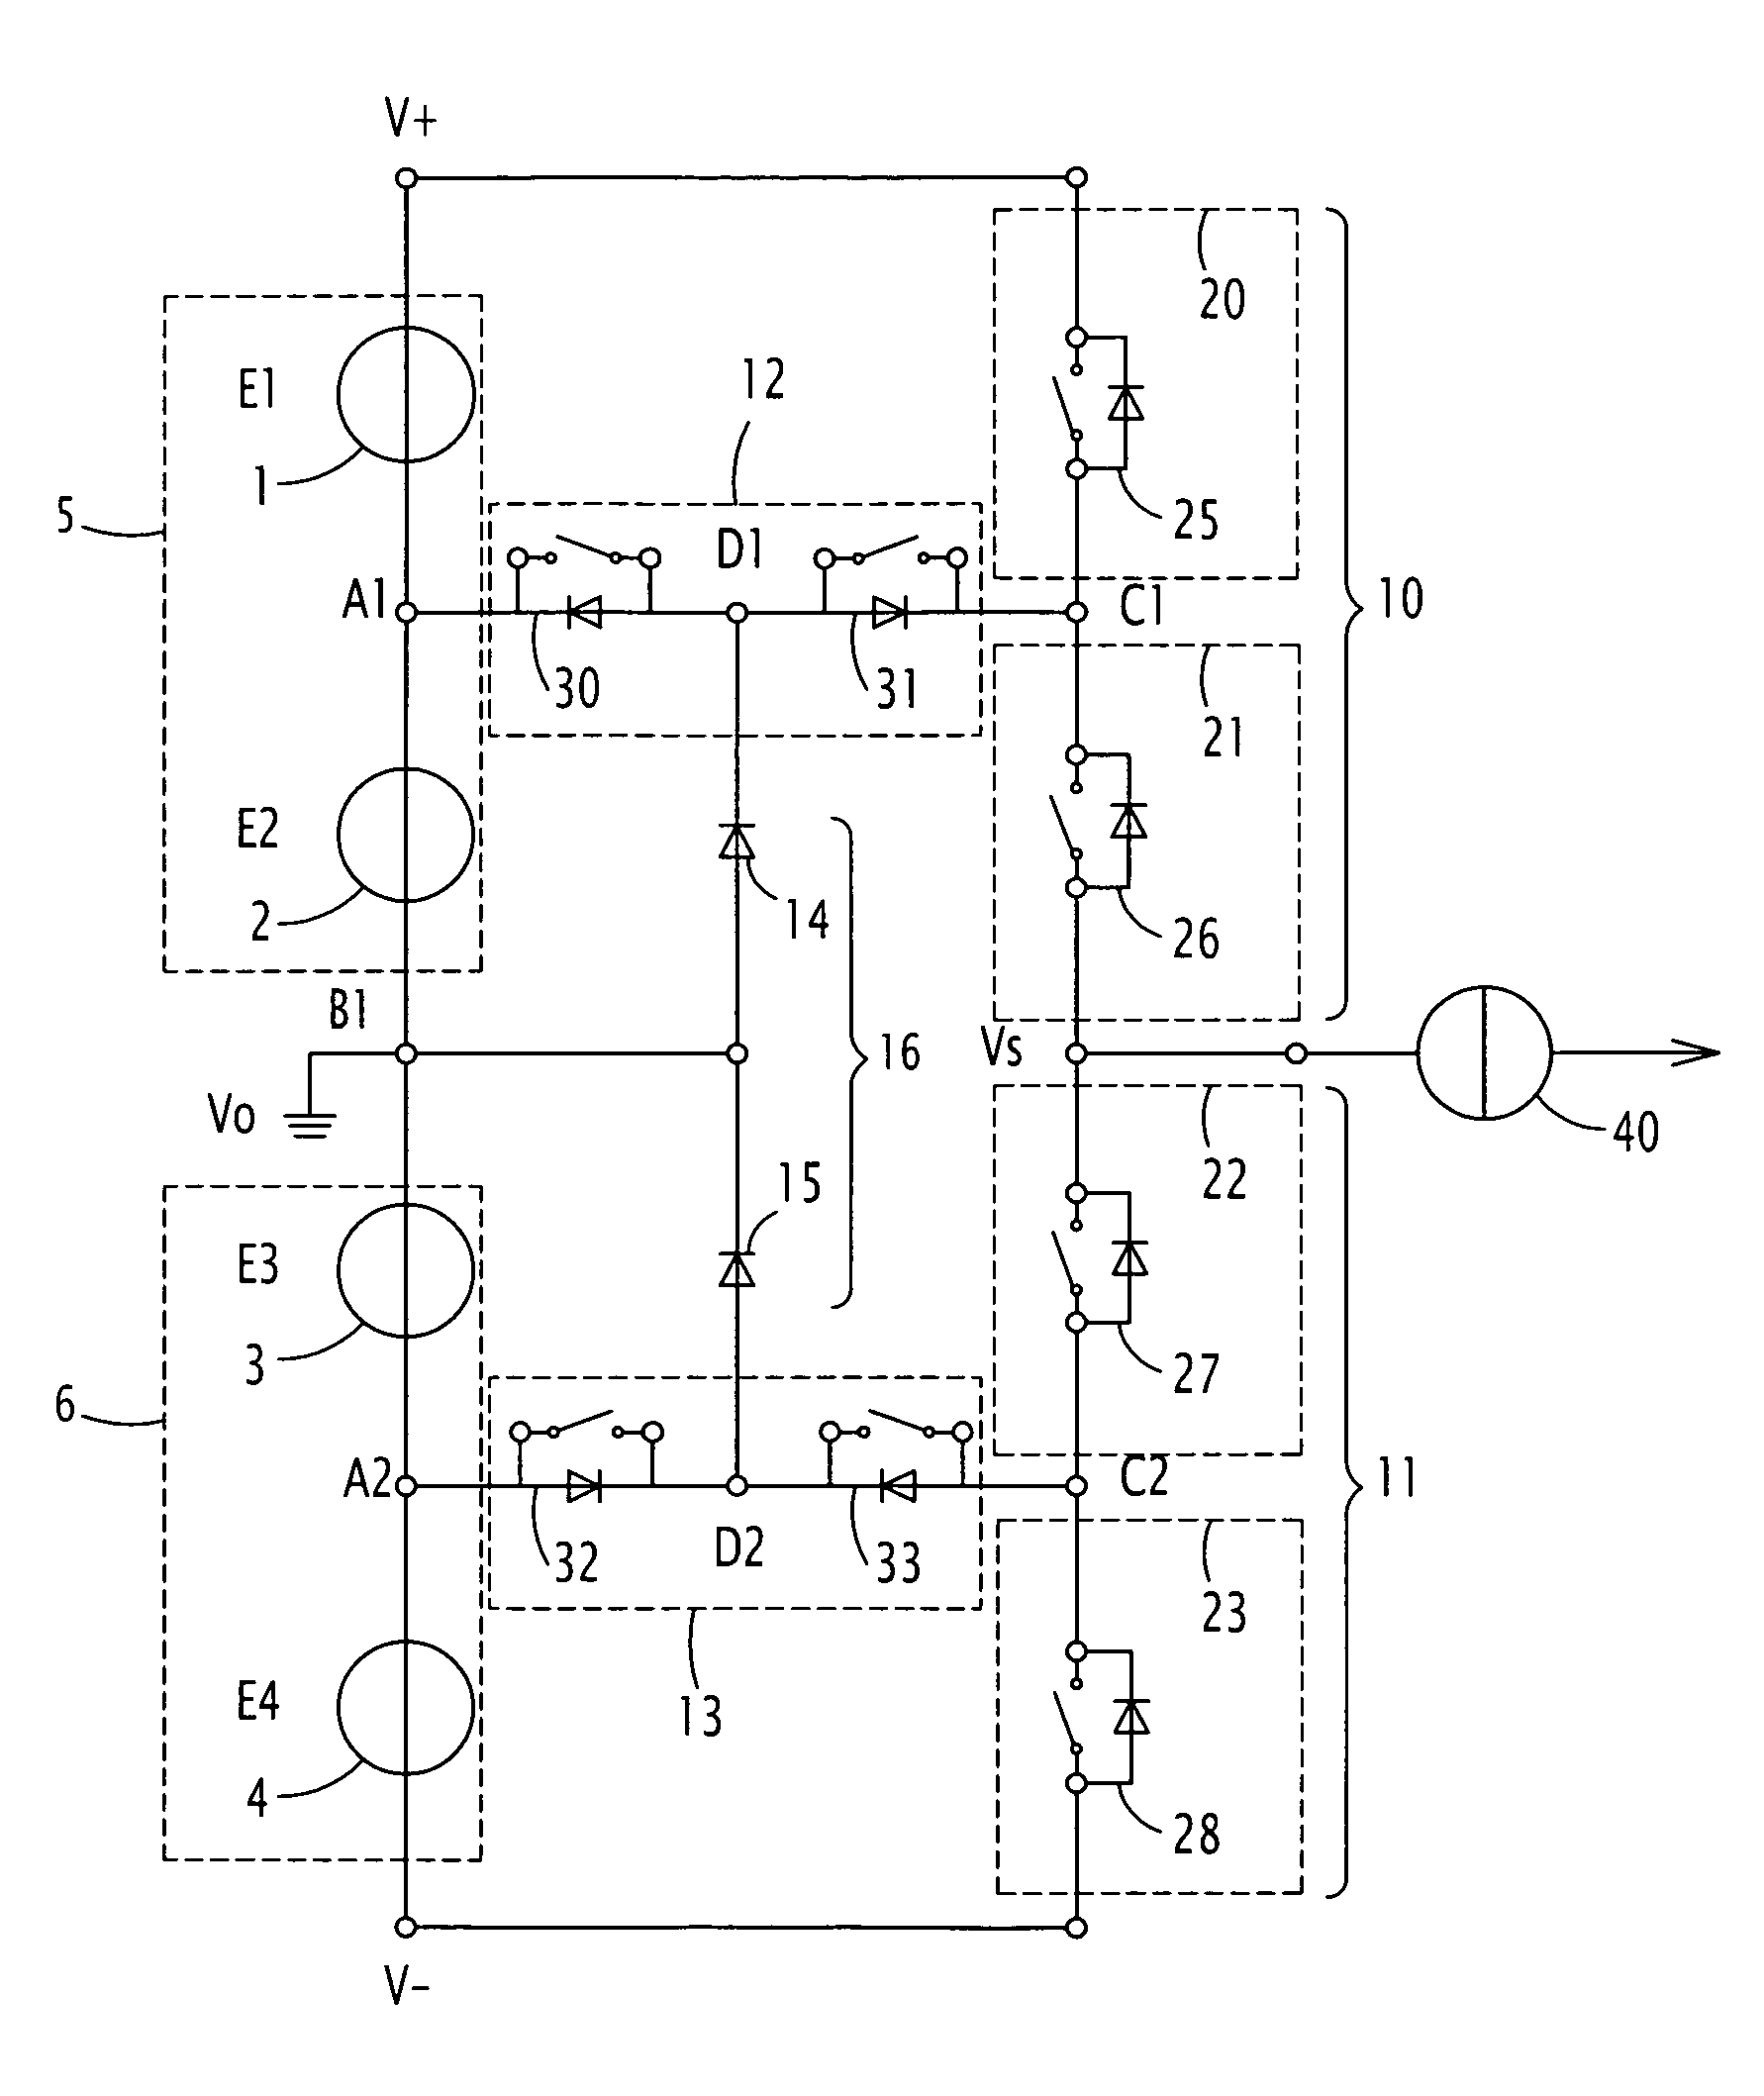 3N-4-level voltage inverter